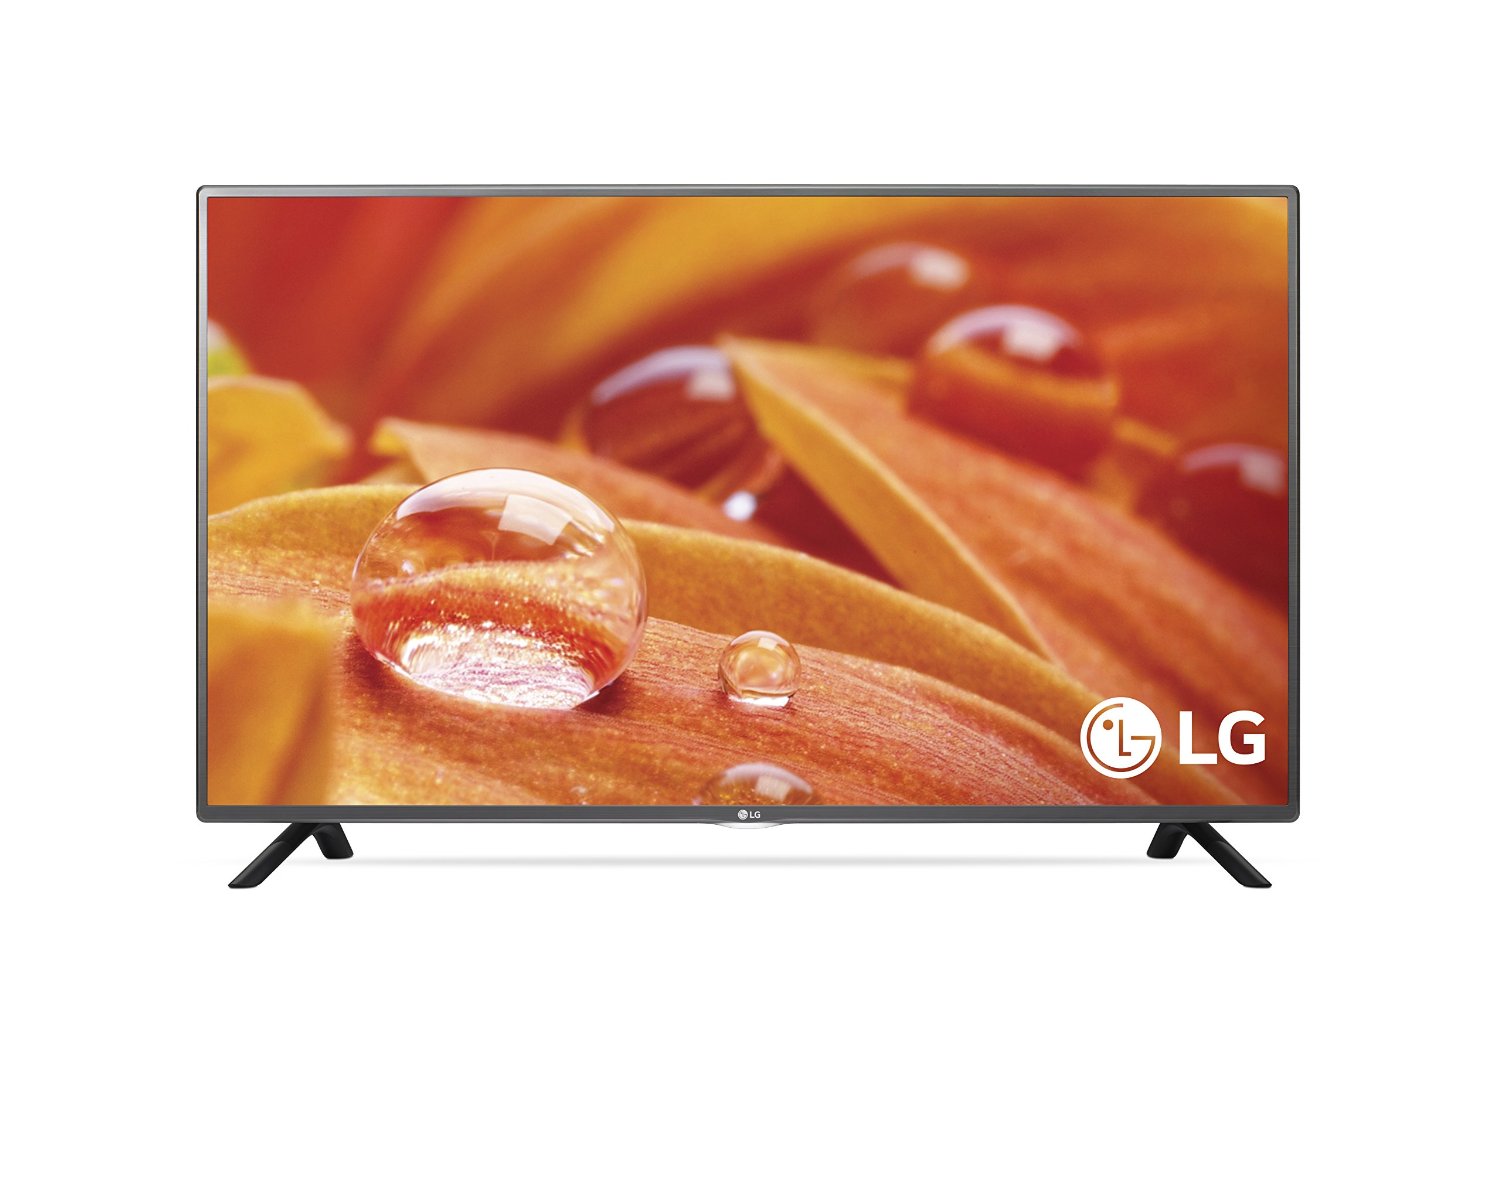 LG-smart-tv